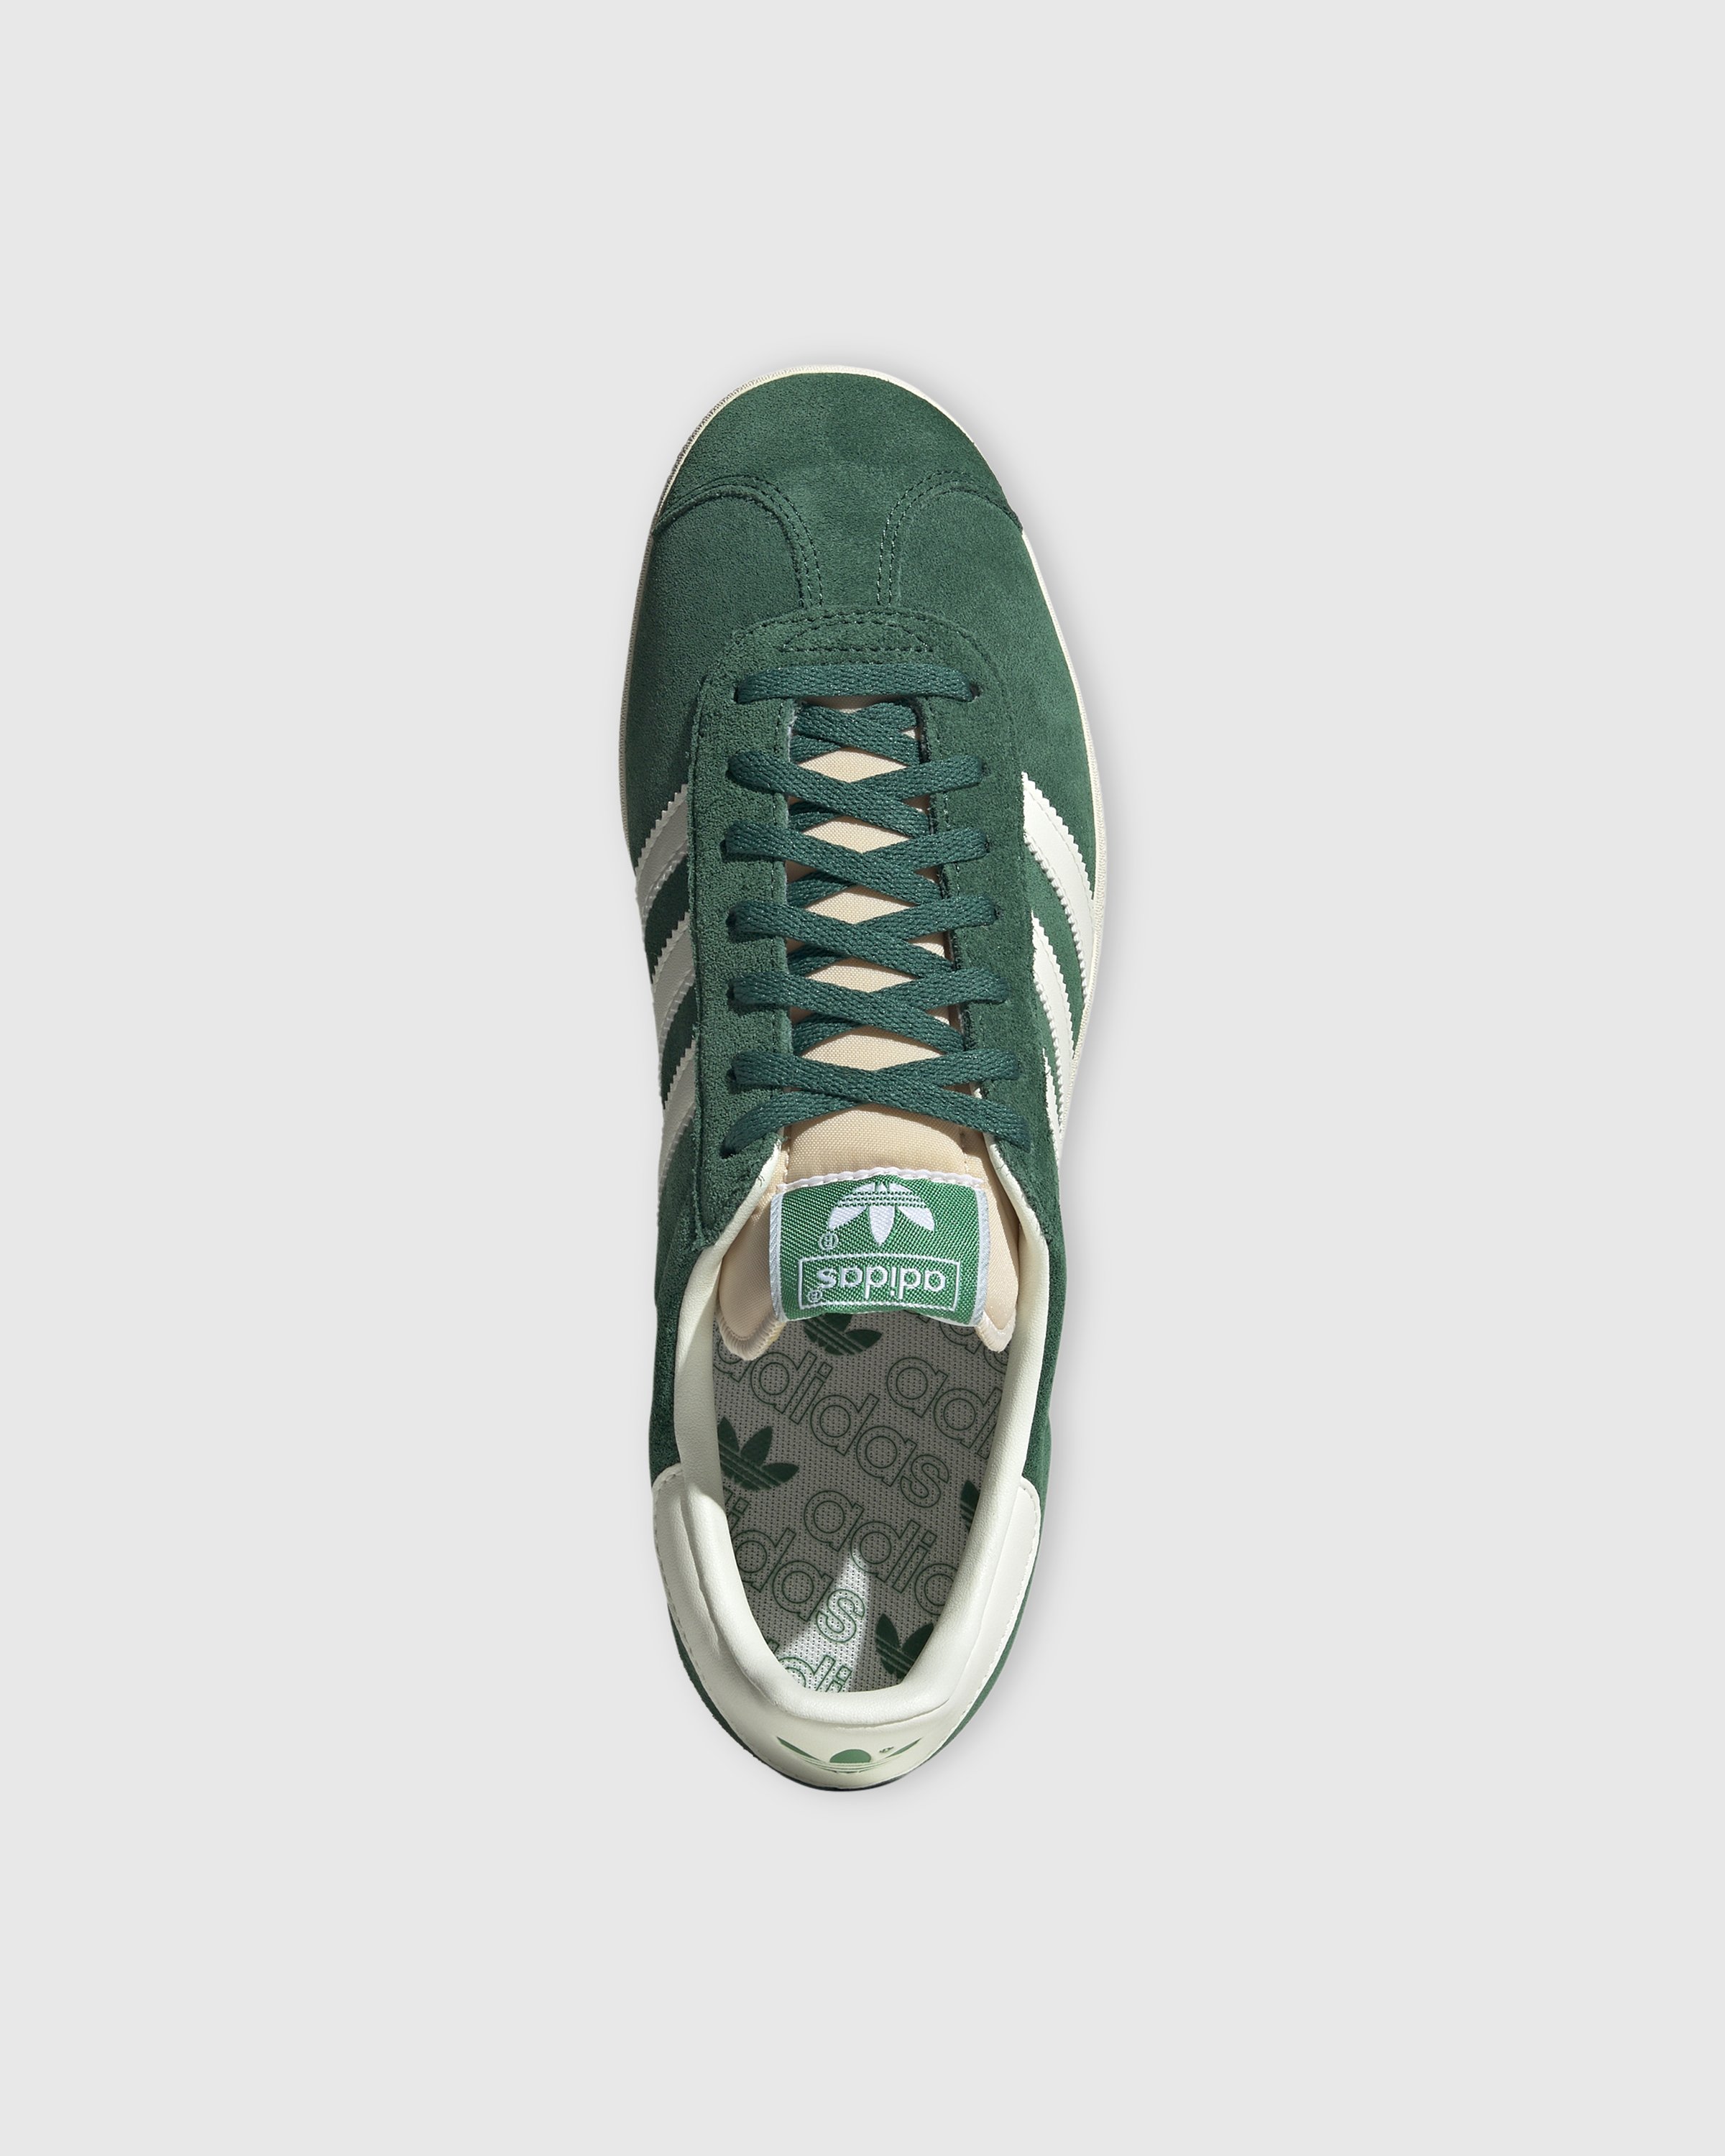 Adidas - Gazelle Green/White - Footwear - Green - Image 5